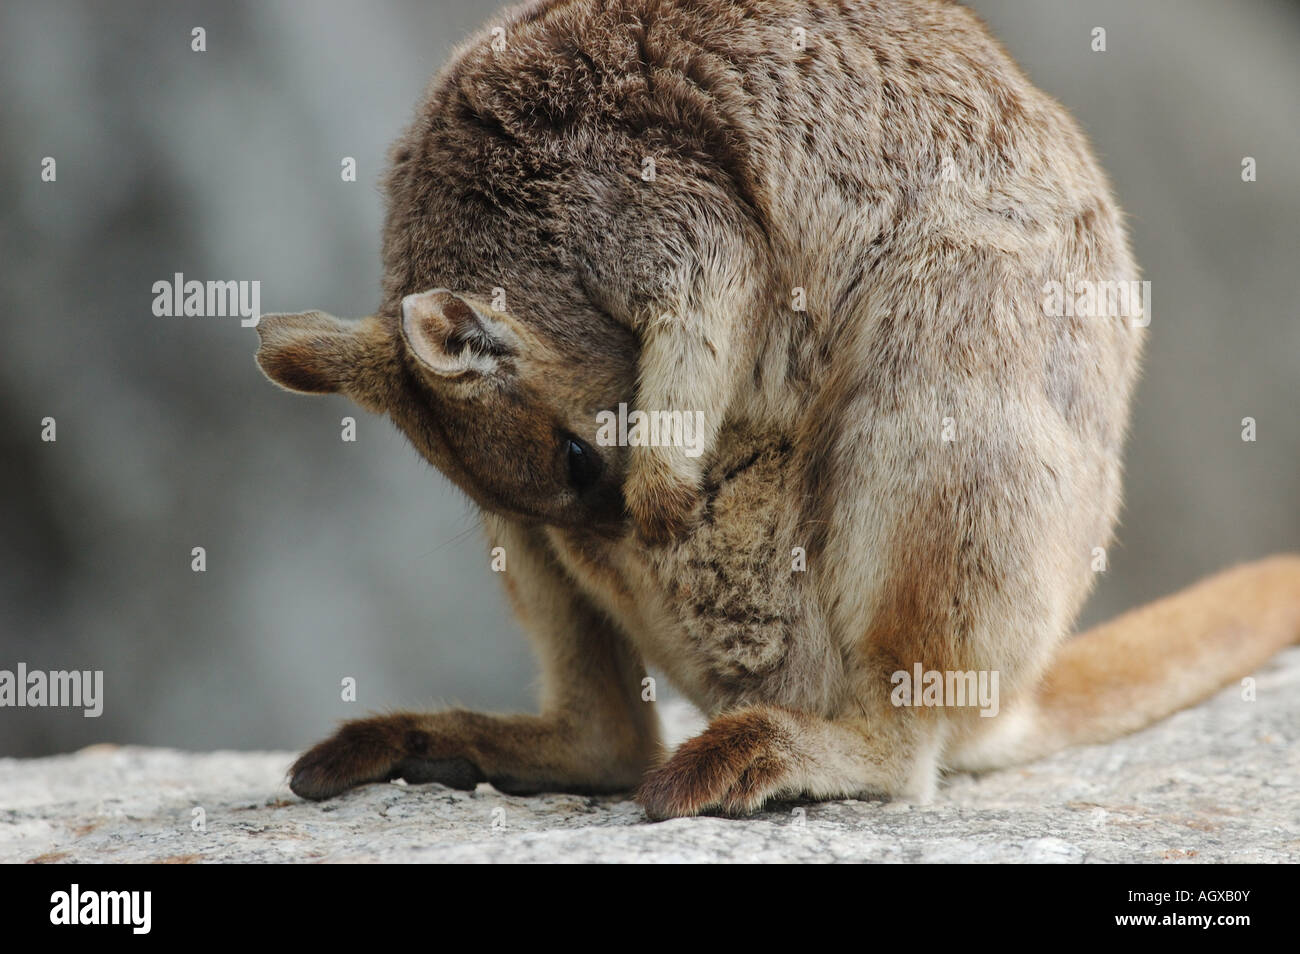 Female Mareeba Rock Wallaby (Petrogale mareeba) washing her baby, Australia Stock Photo